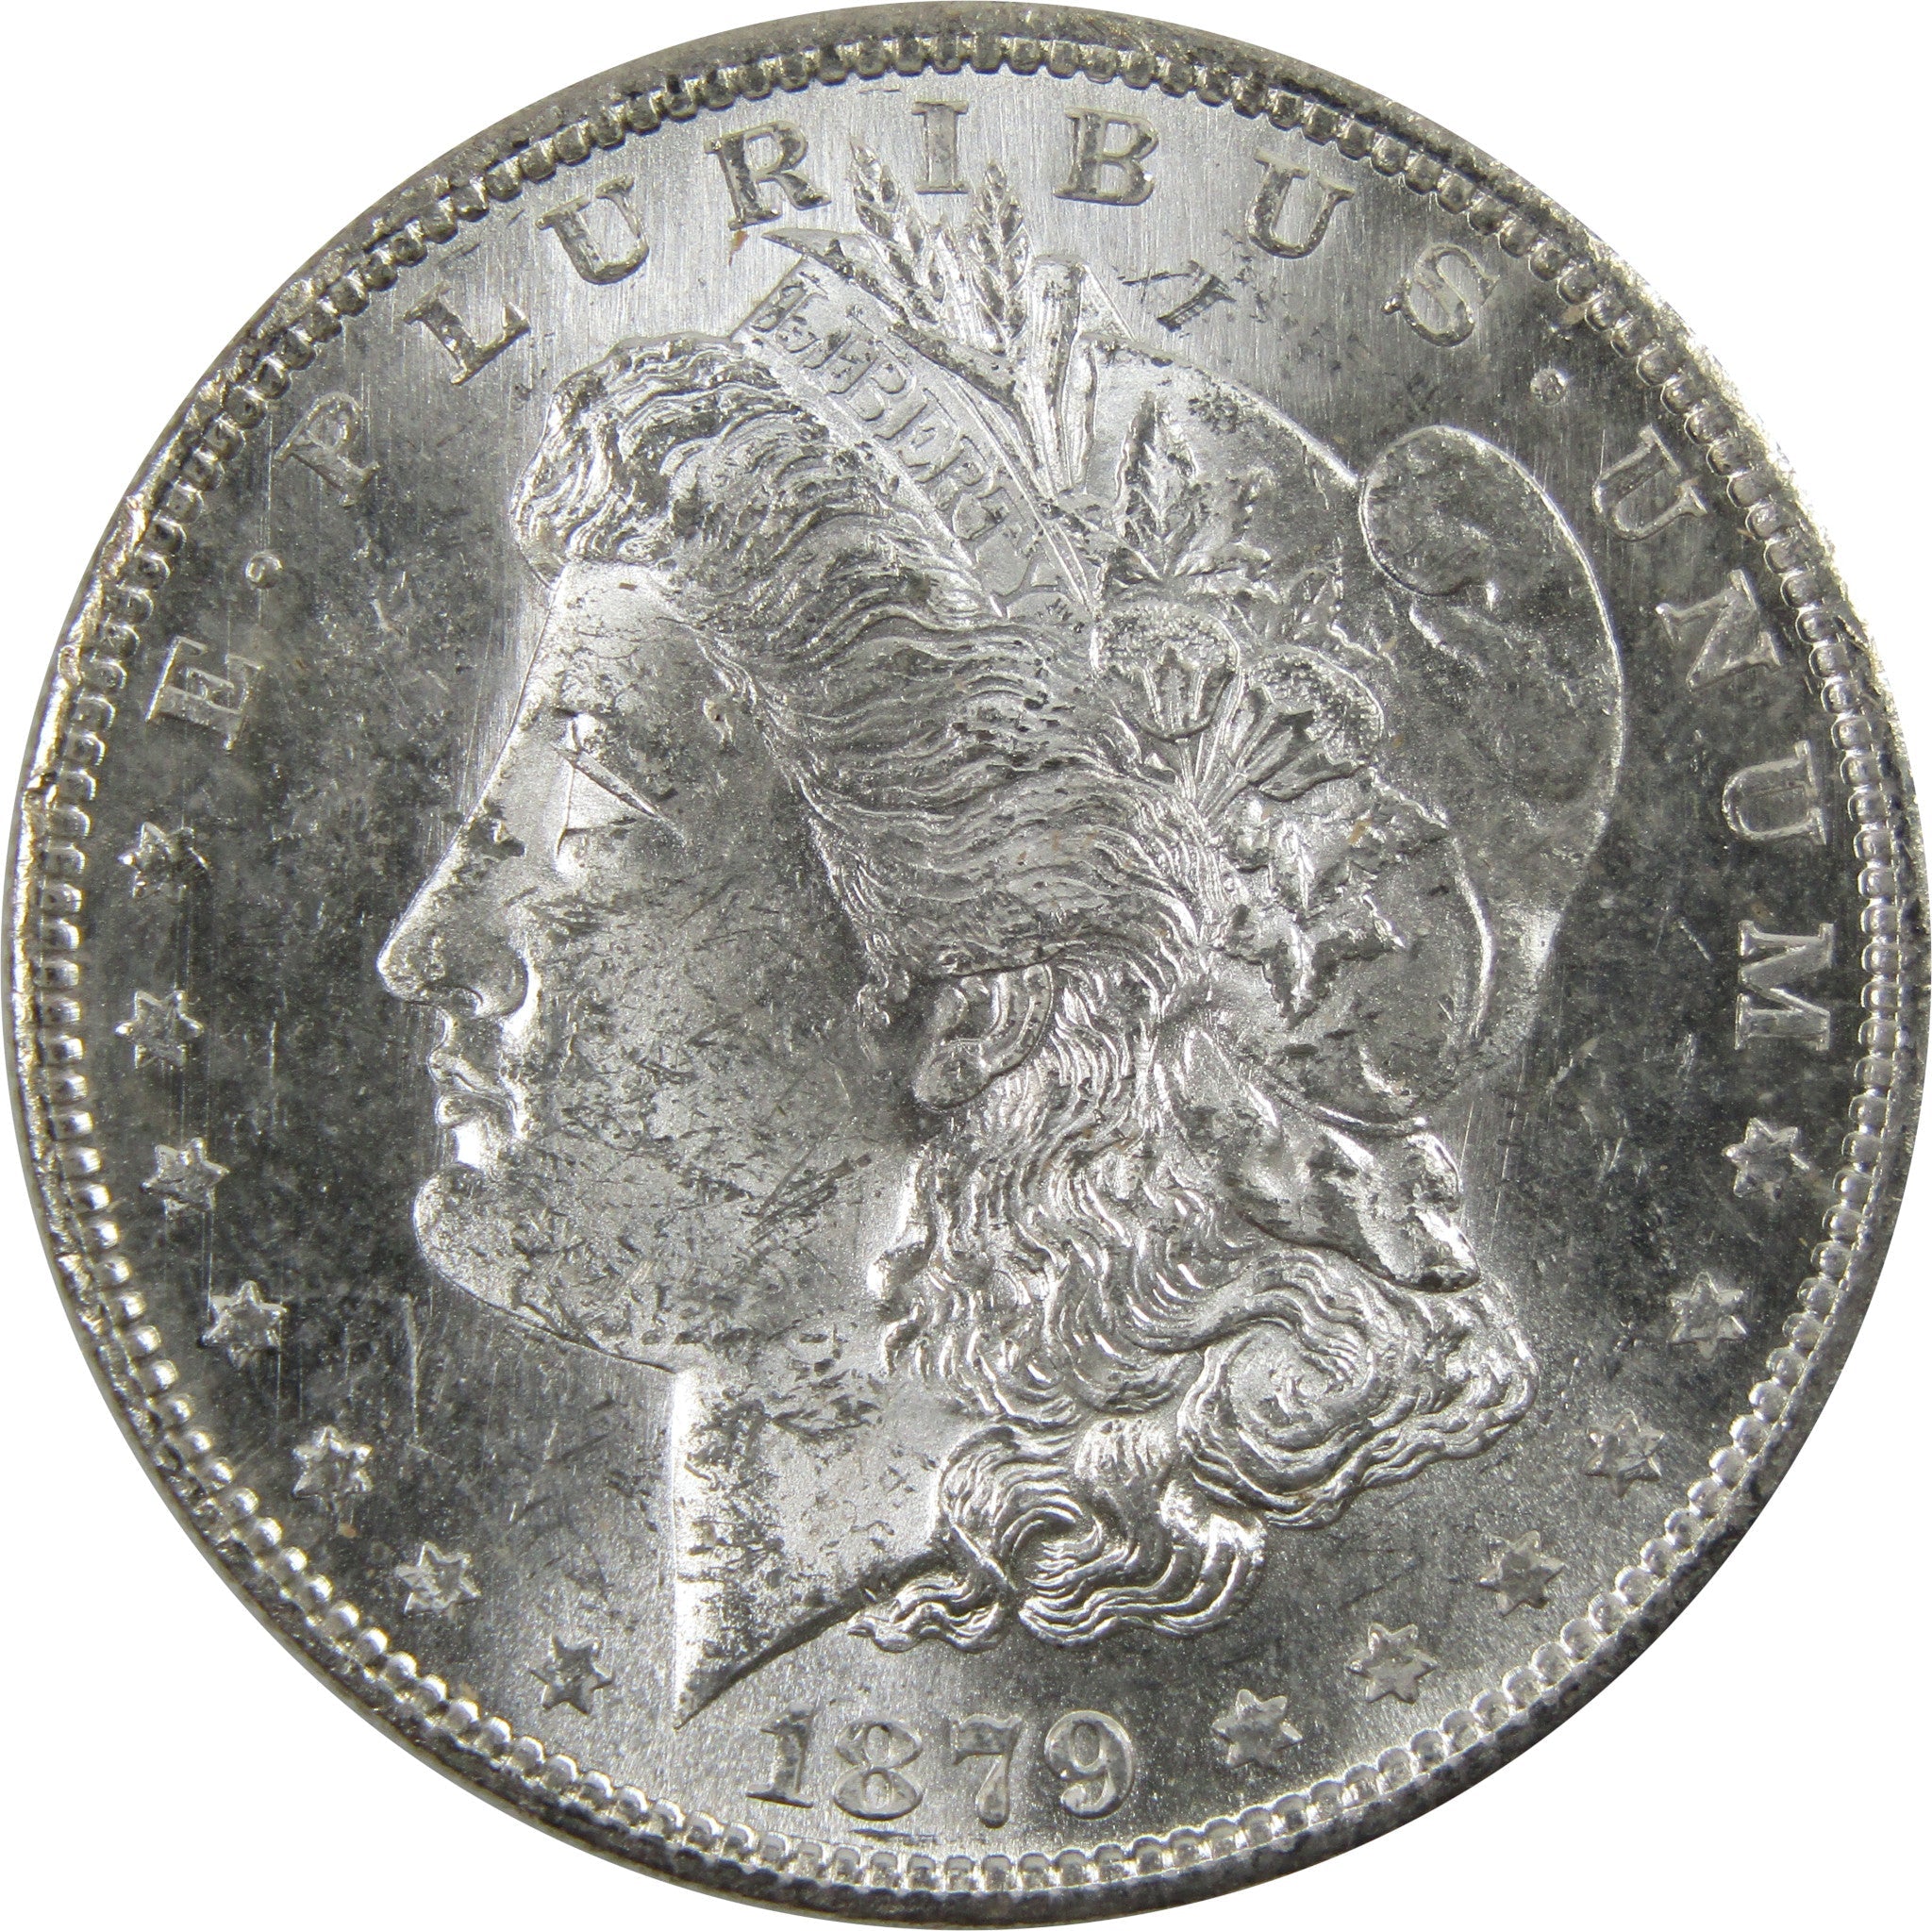 1879 S Morgan Dollar BU Uncirculated 90% Silver $1 SKU:I5445 - Morgan coin - Morgan silver dollar - Morgan silver dollar for sale - Profile Coins &amp; Collectibles